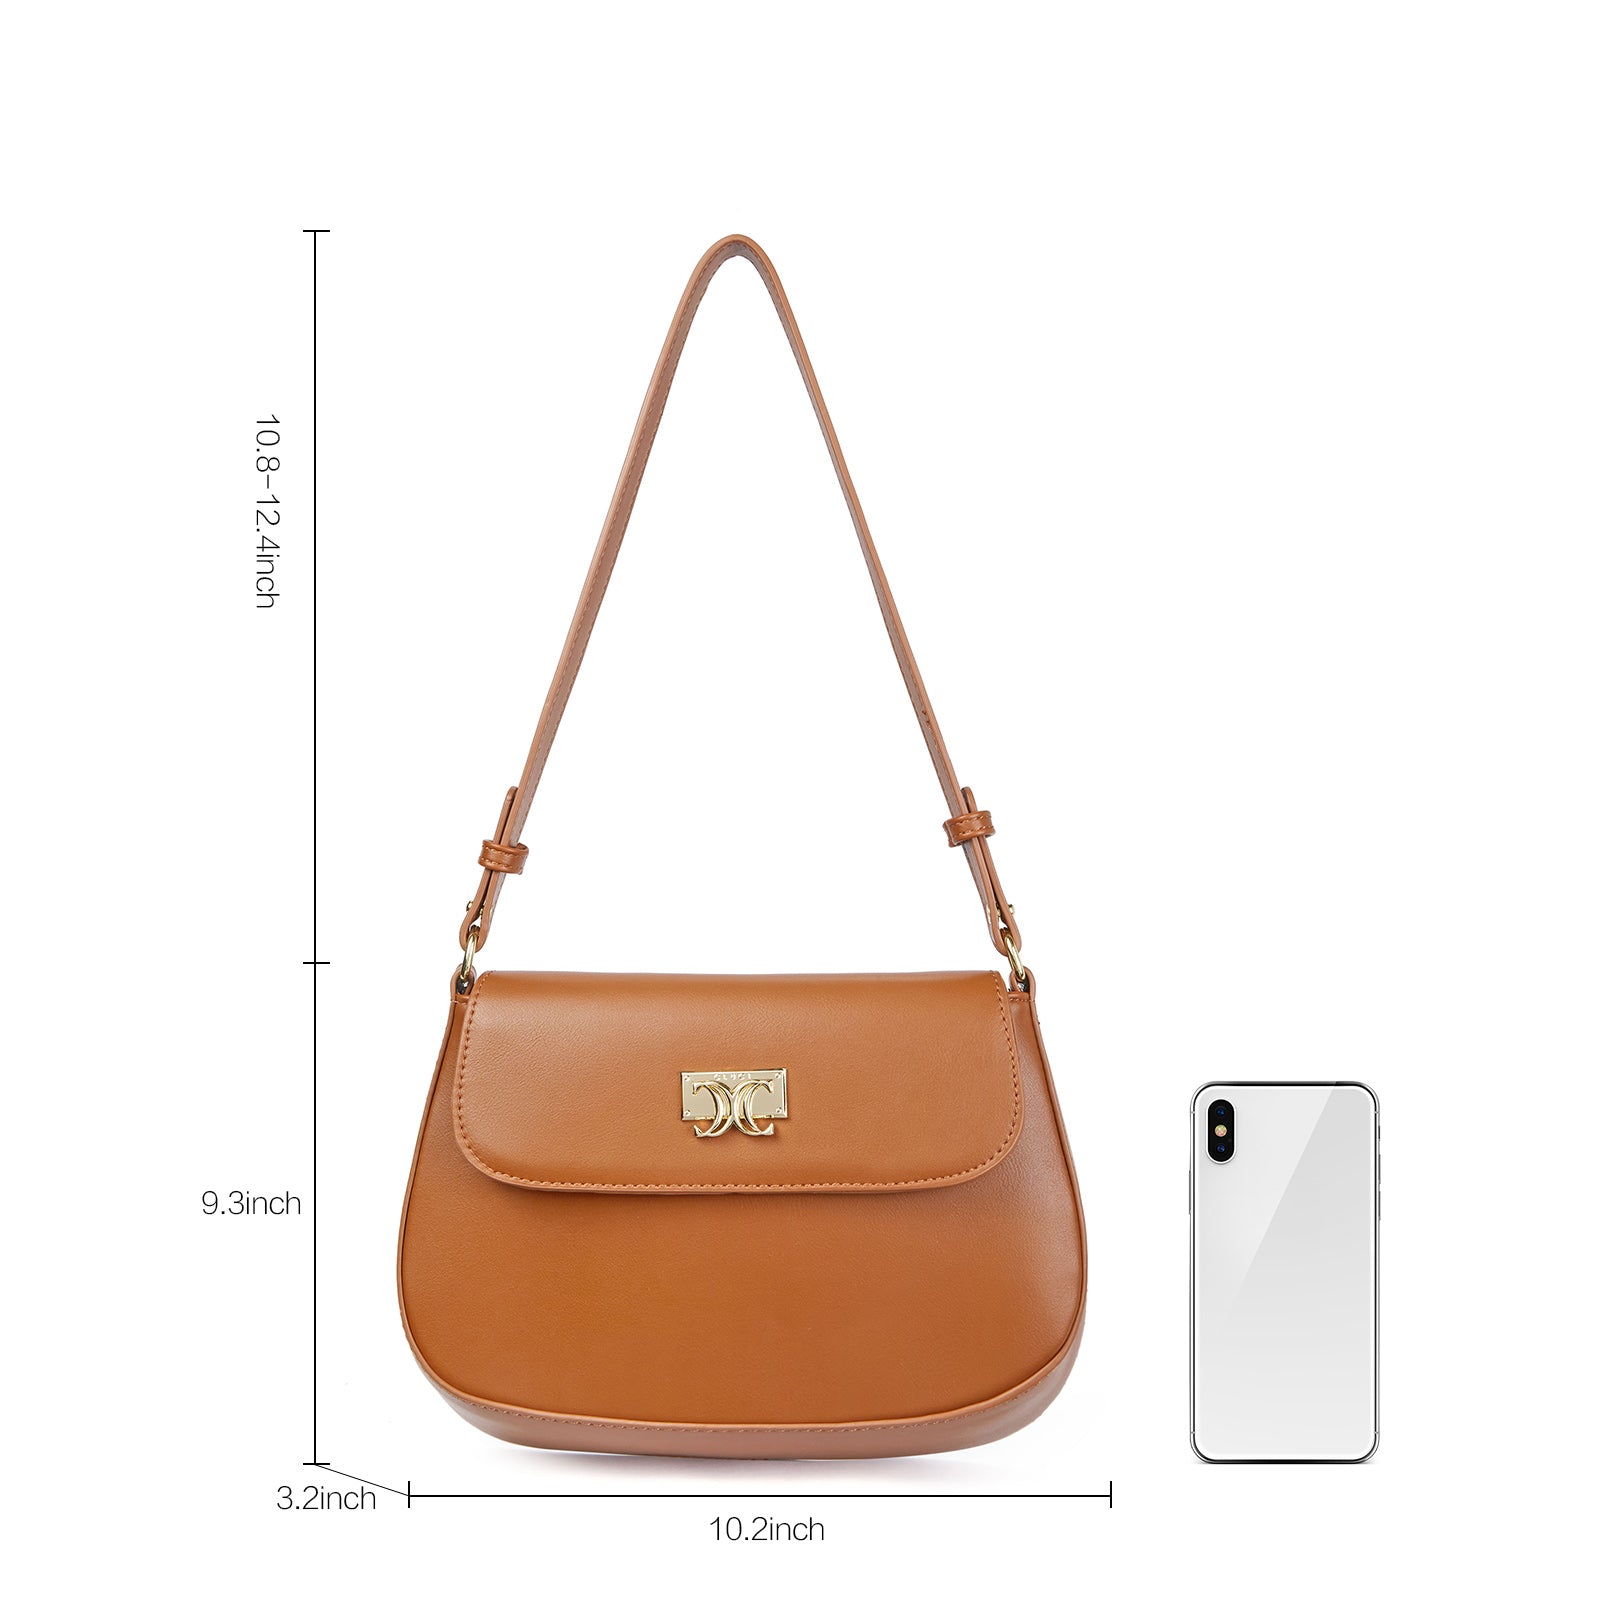 Minimalist Hobo Bag | Hobo bag, Bag accessories, Purses